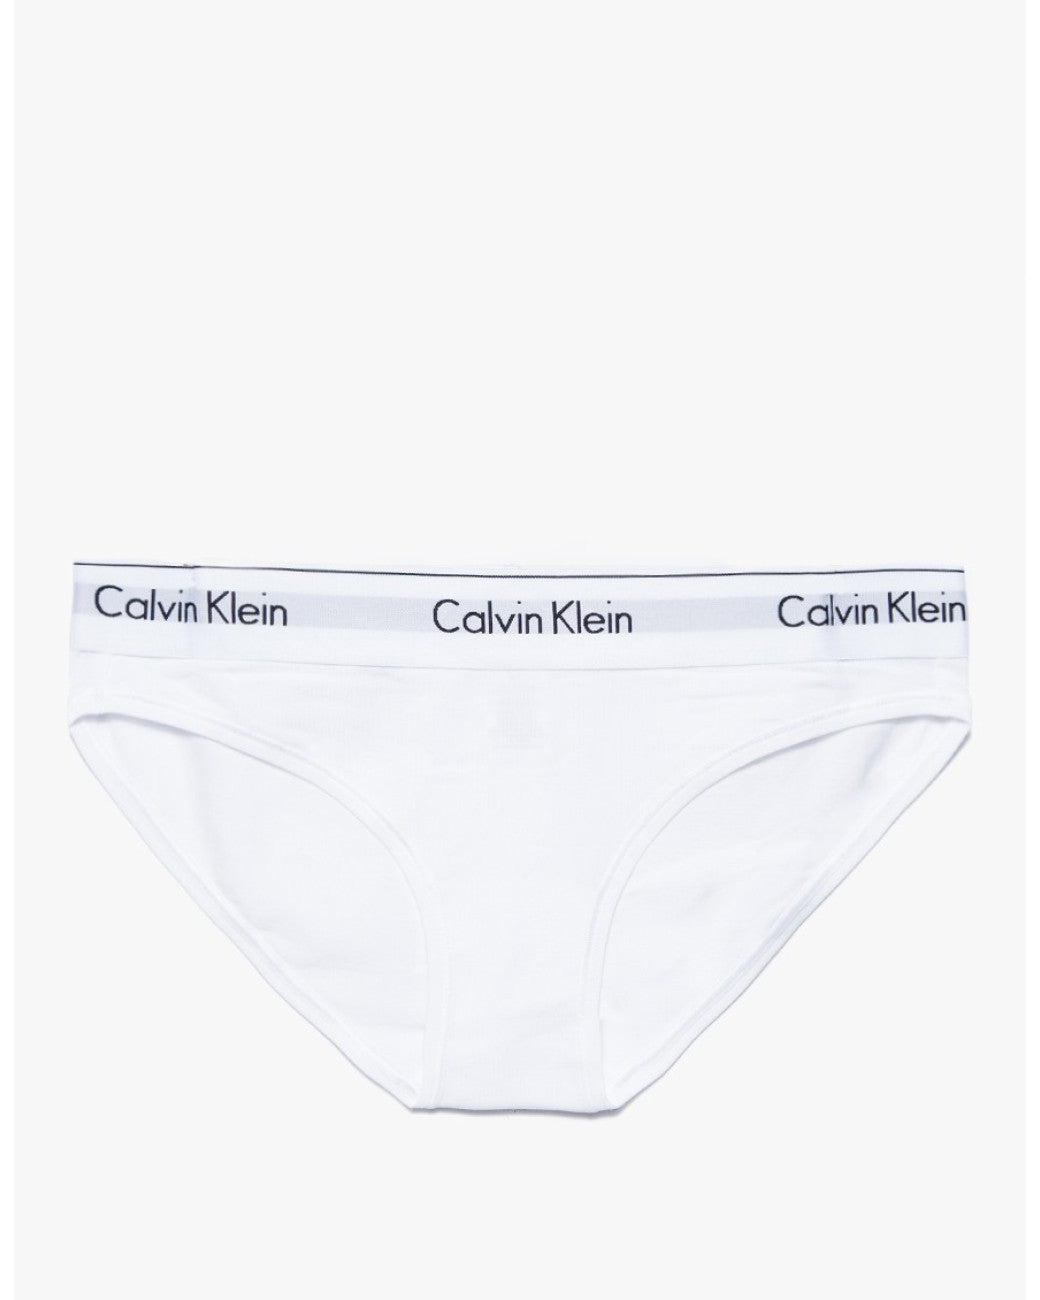 CALVIN KLEIN : MODERN COTTON BIKINI UNDERWEAR WHITE - 85 86 eightyfiveightysix